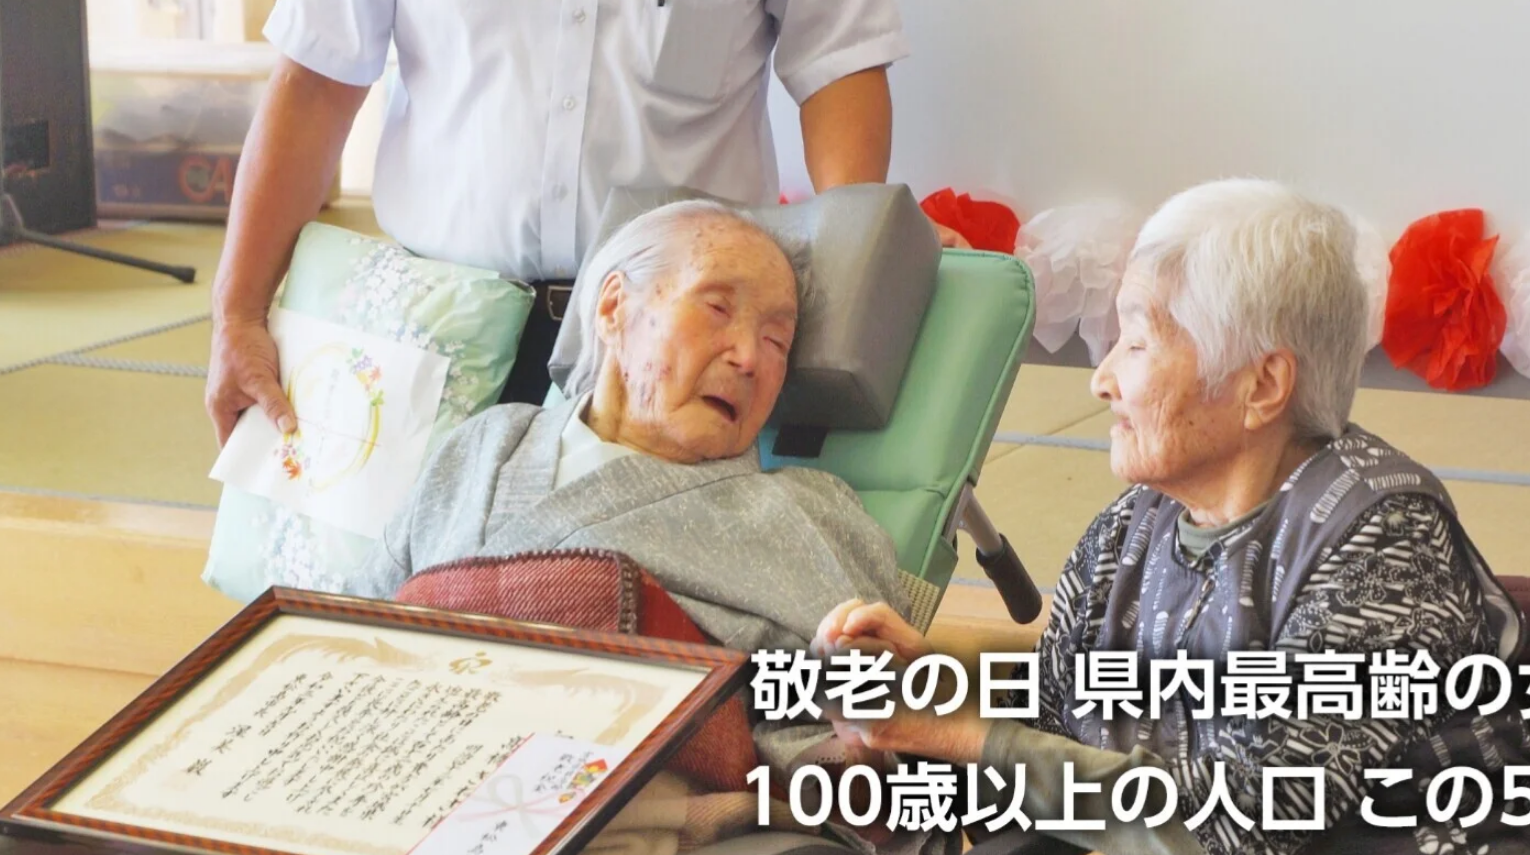 In September 2021, aged 112, with her eldest daughter, aged 87. (Source: Ishinomaki Hibi Shimbun)